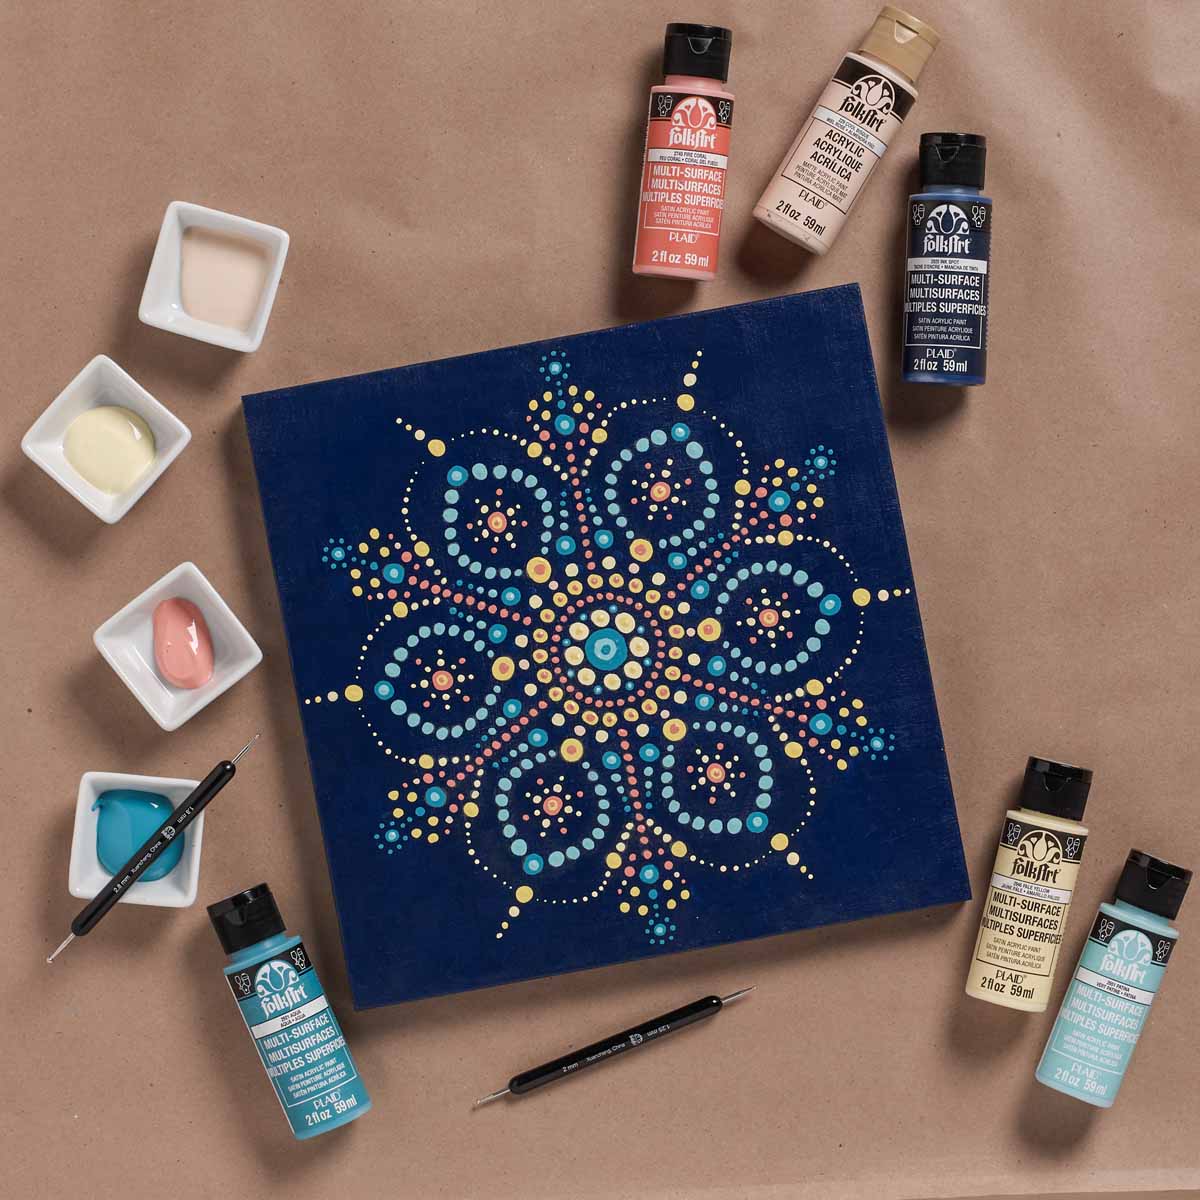 Mandala on Blue Canvas - DIY Wall Art - Project